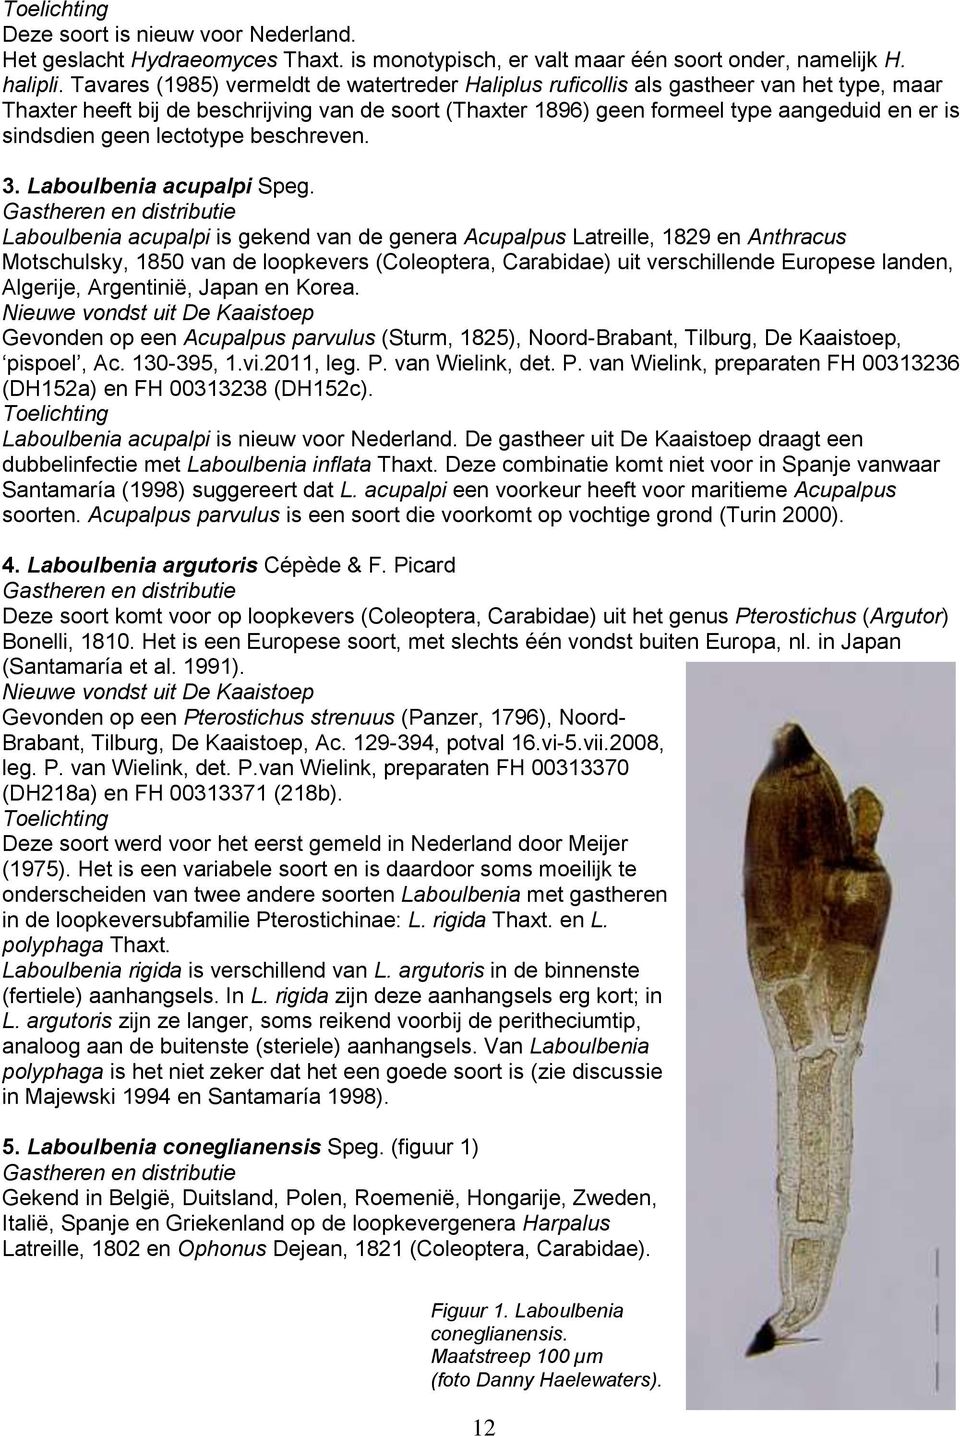 geen lectotype beschreven. 3. Laboulbenia acupalpi Speg.